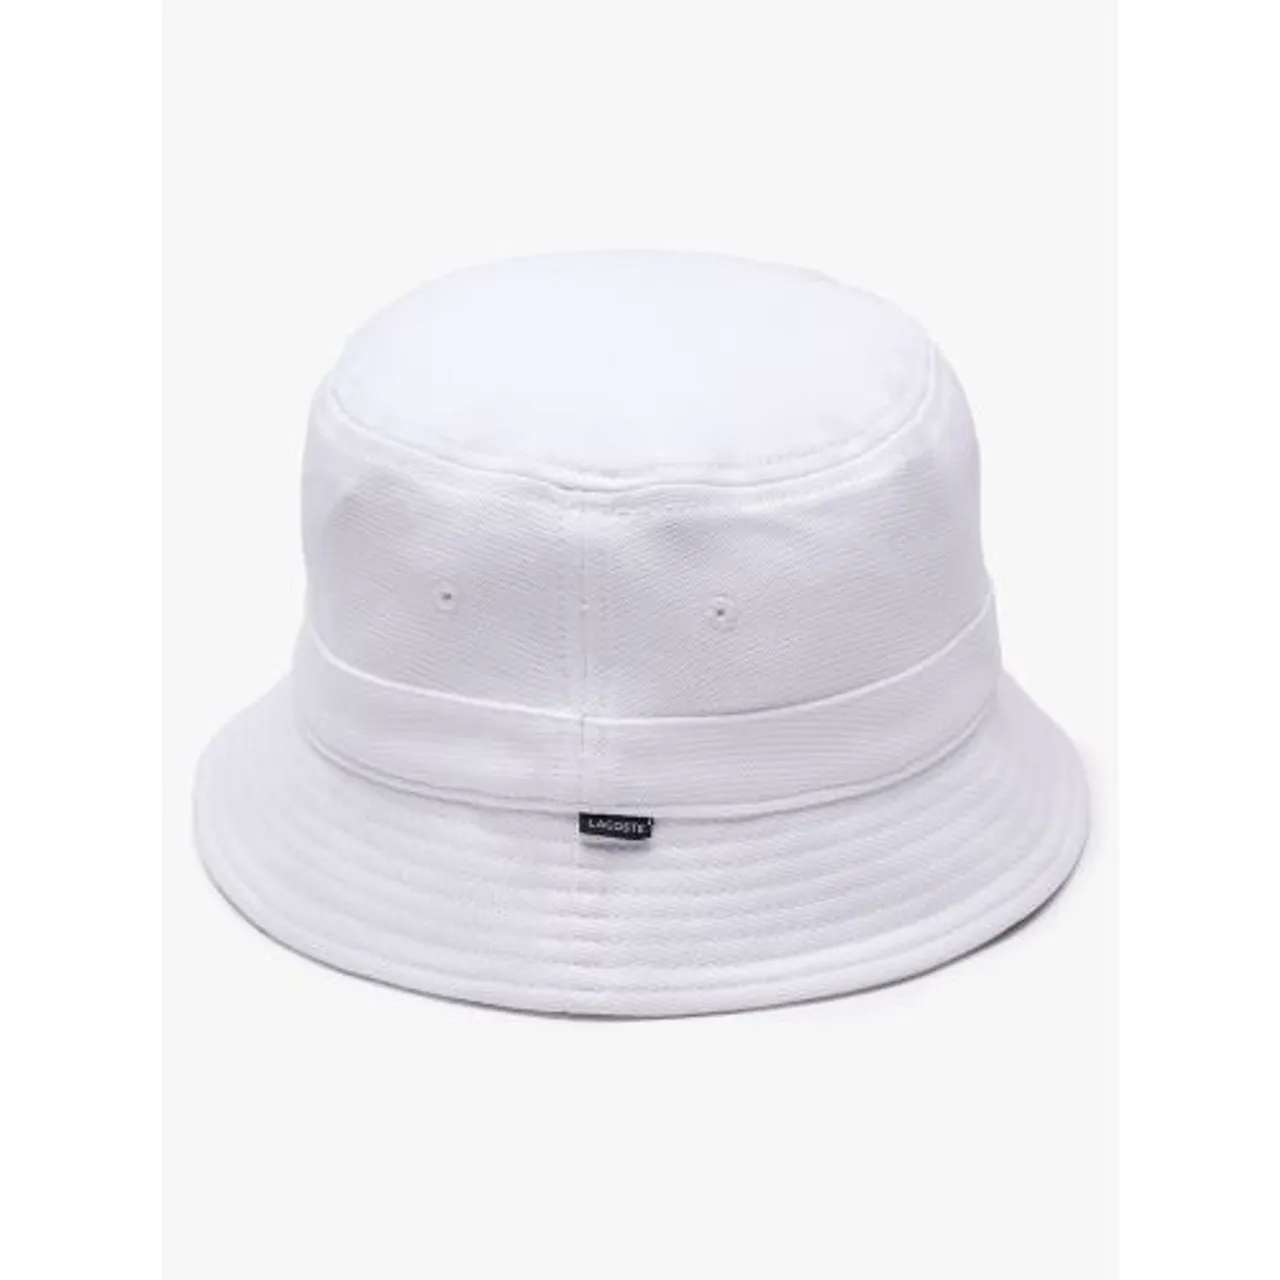 Lacoste Mens White Organic Cotton Bucket Hat